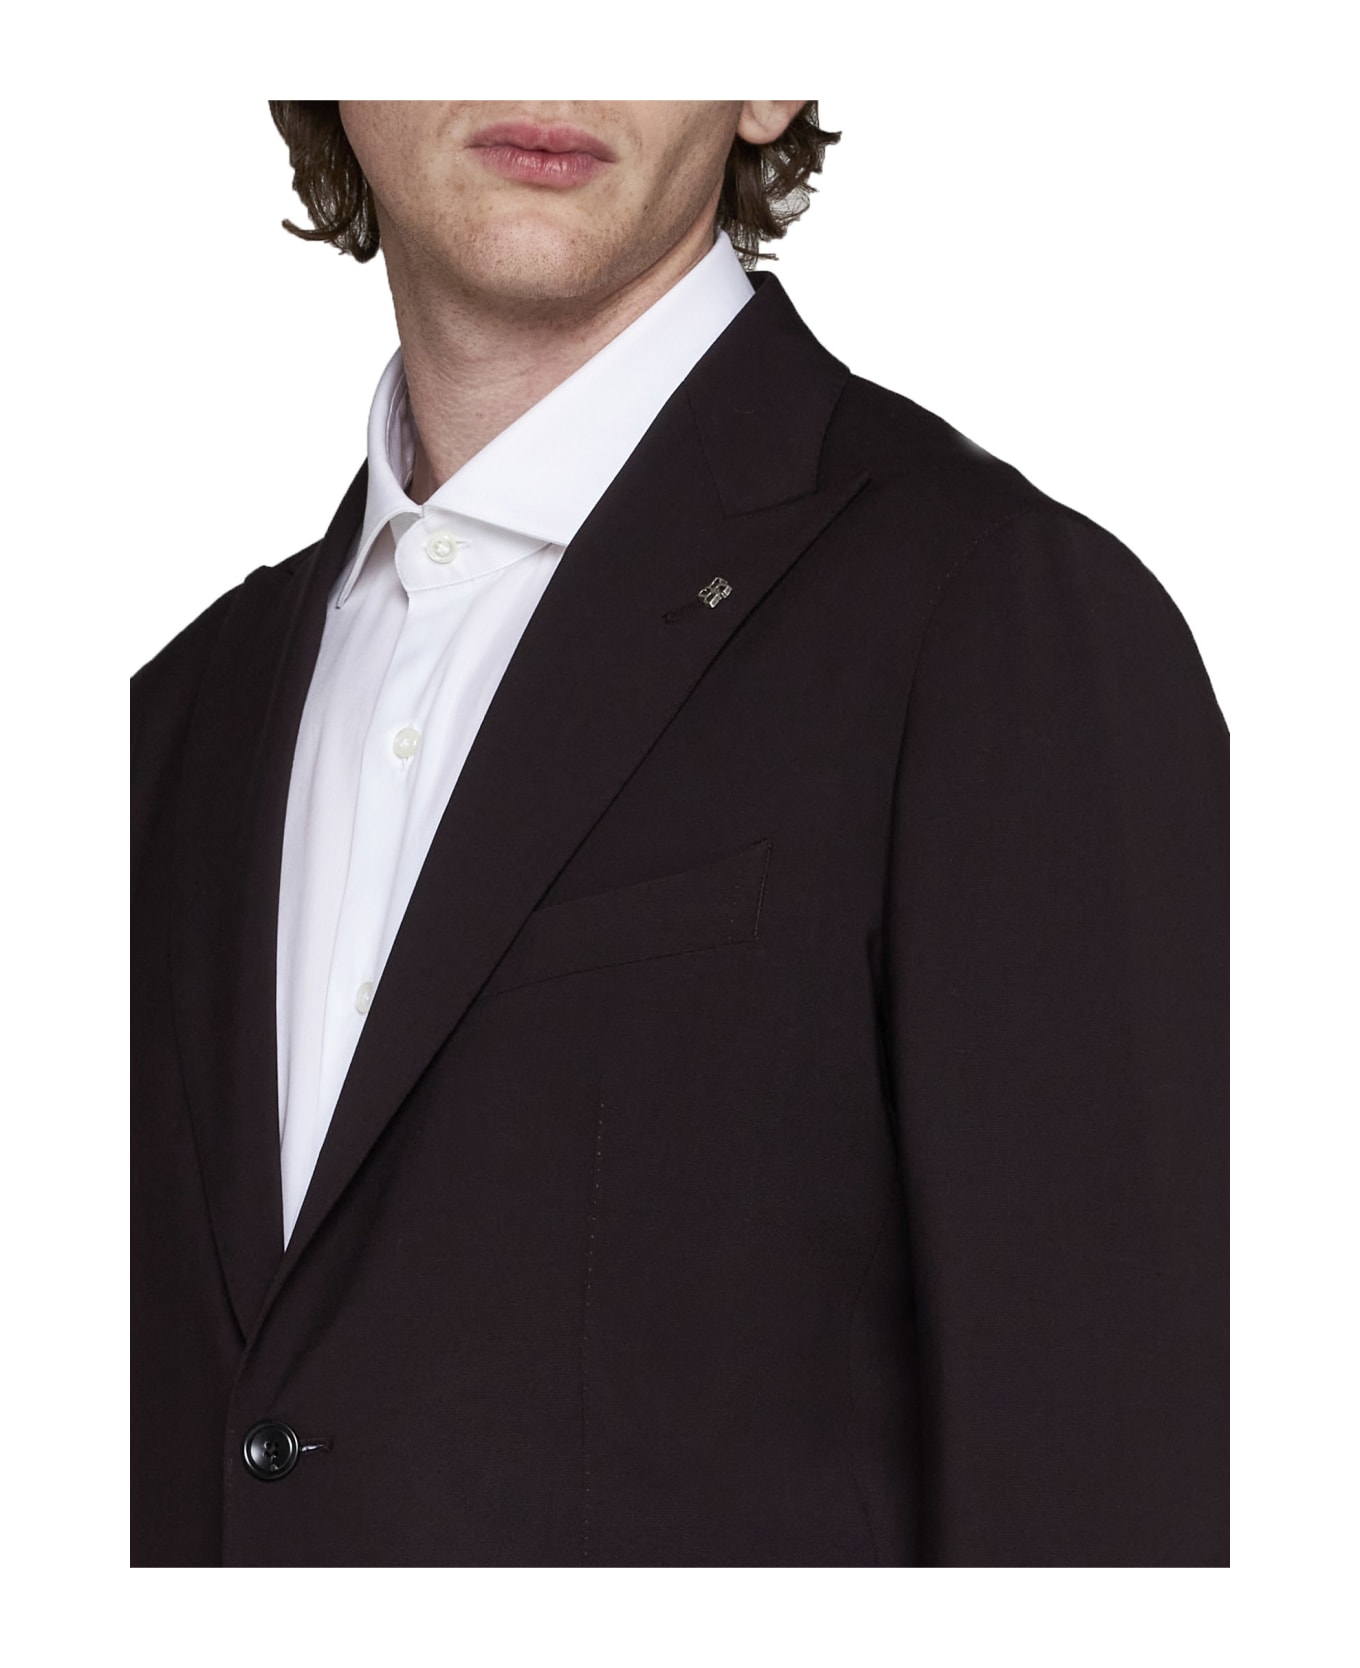 Tagliatore Suit - Bordeaux スーツ